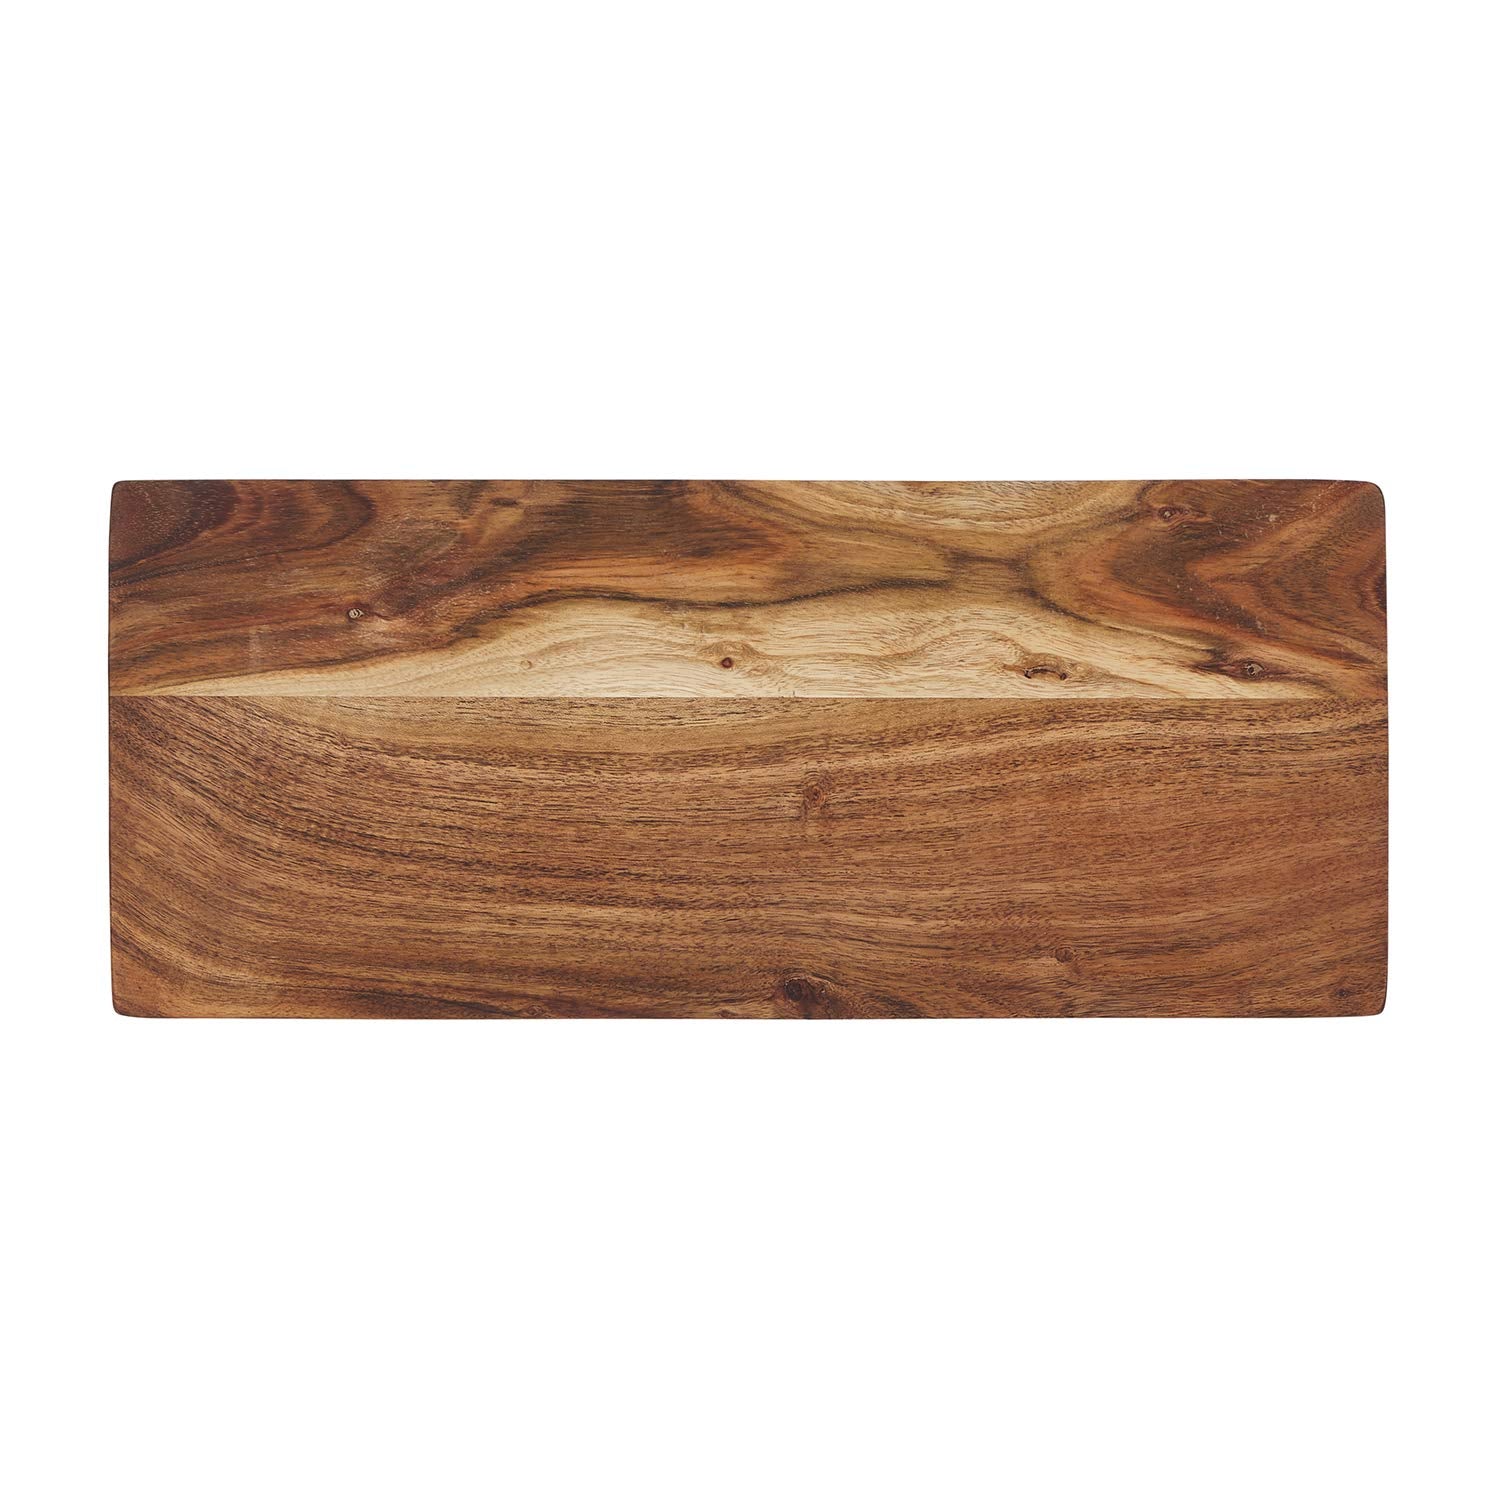 Acacia wood elevated serving board